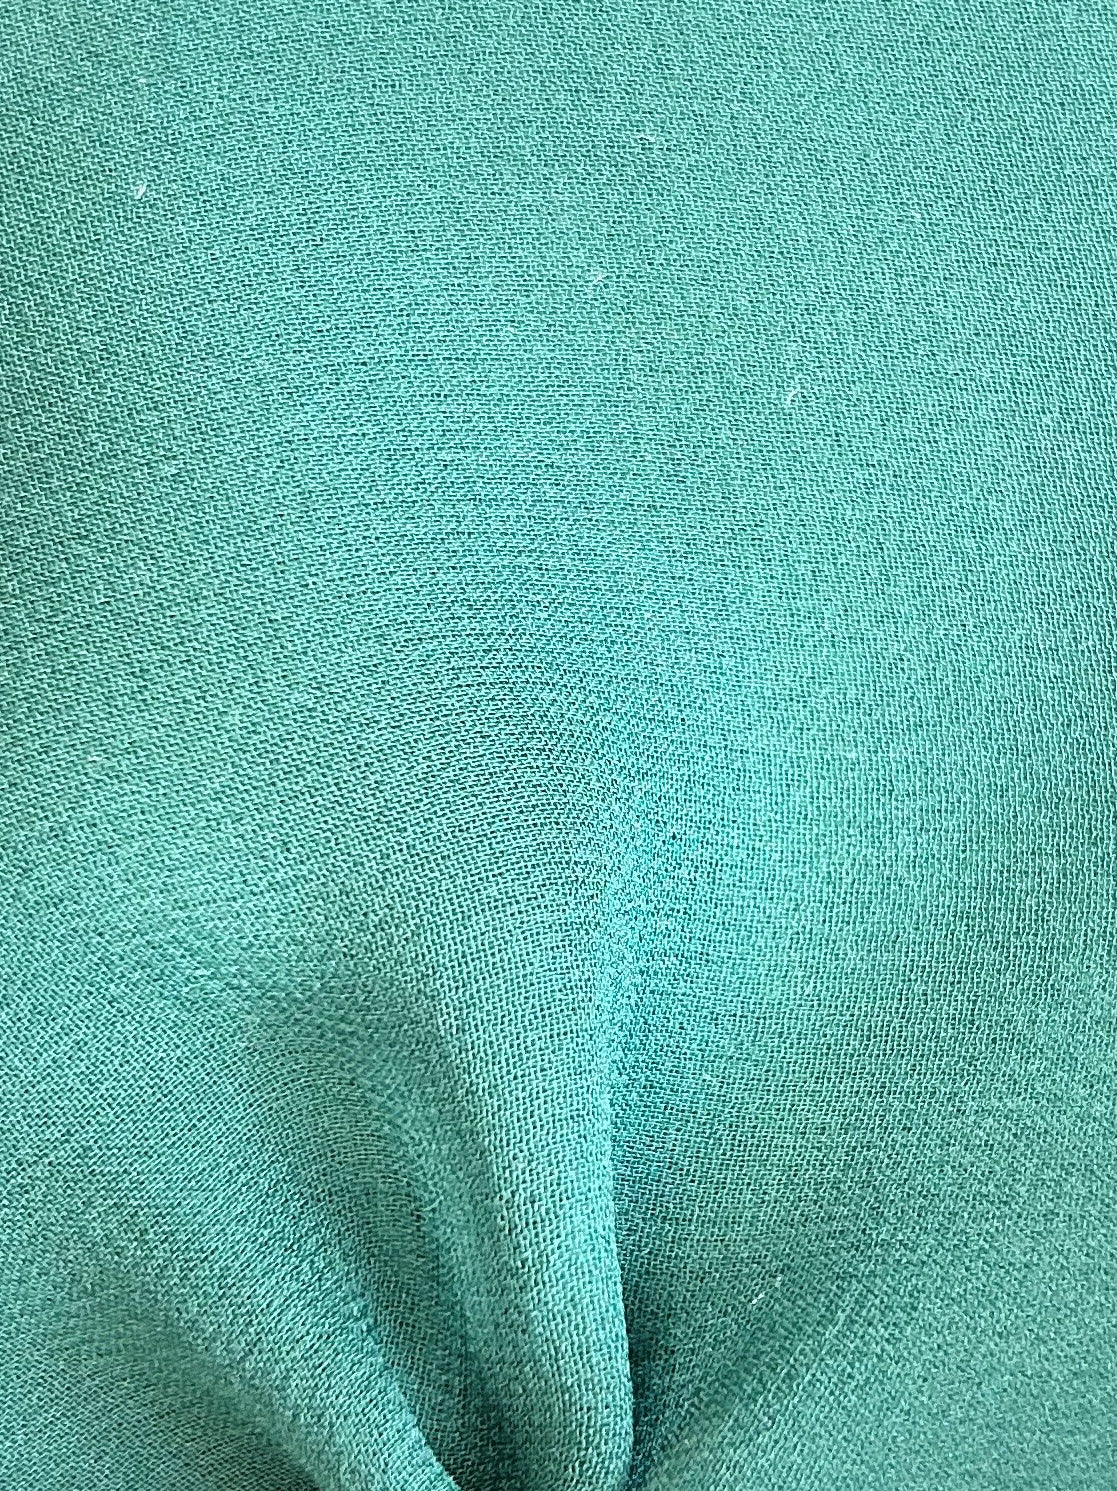 Teal Green Silk Georgette - Shimmer